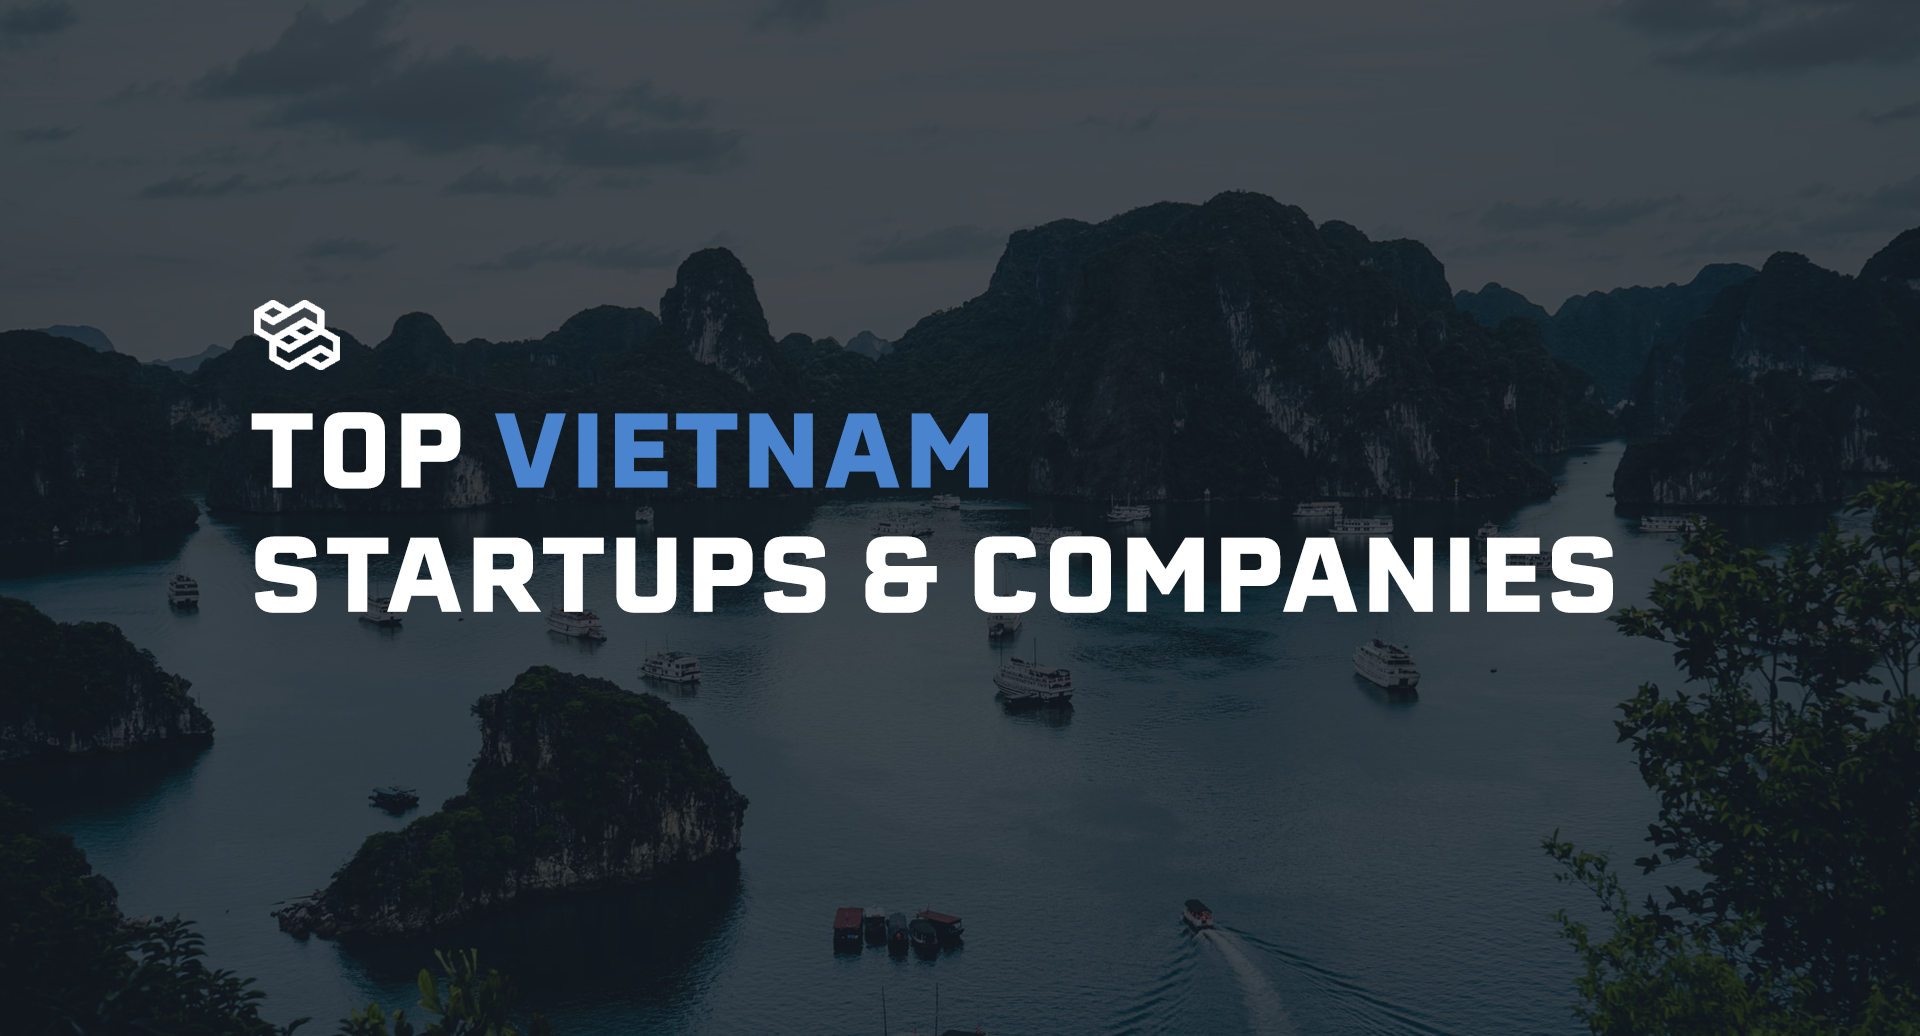 101 Top Vietnam Construction Companies and Startups